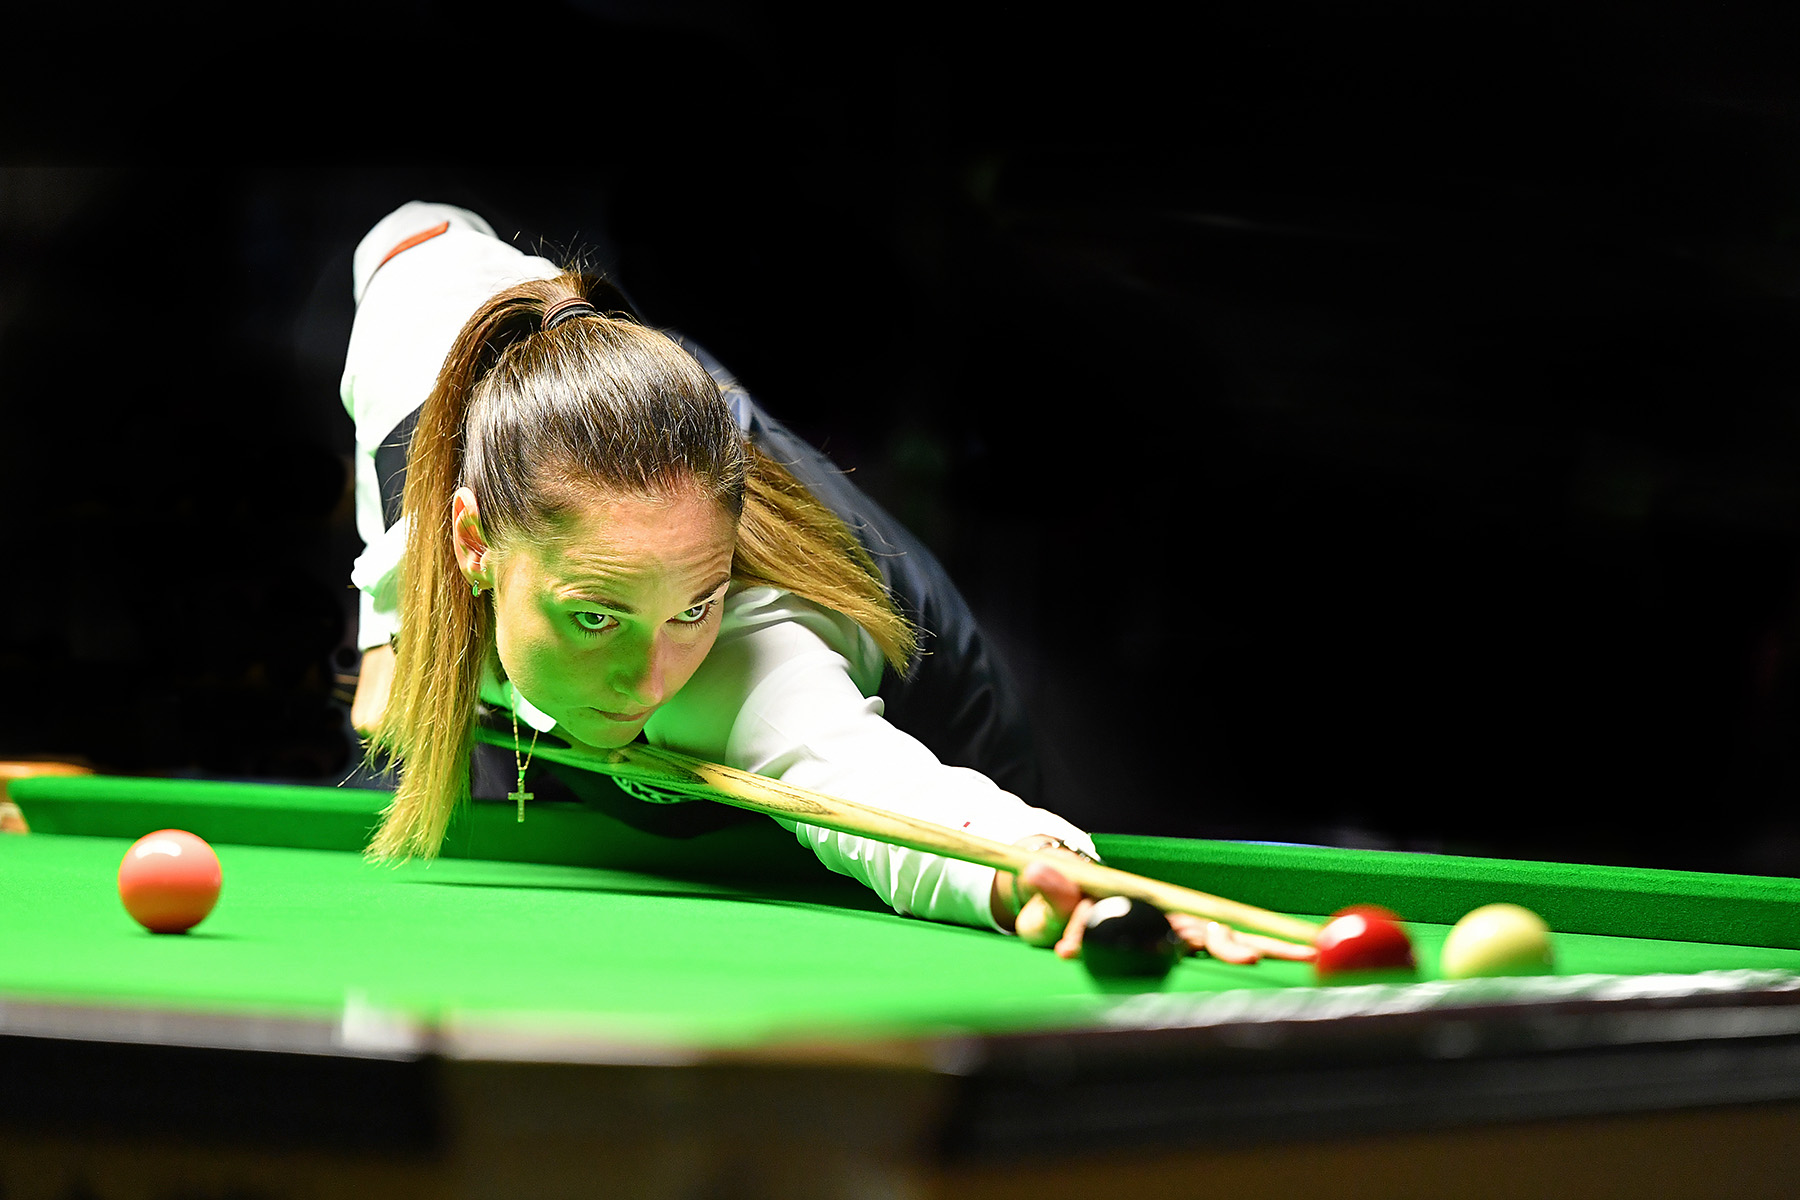 Taom UK Women's Snooker Championship 2022: Tournament Information - World Women's Snooker